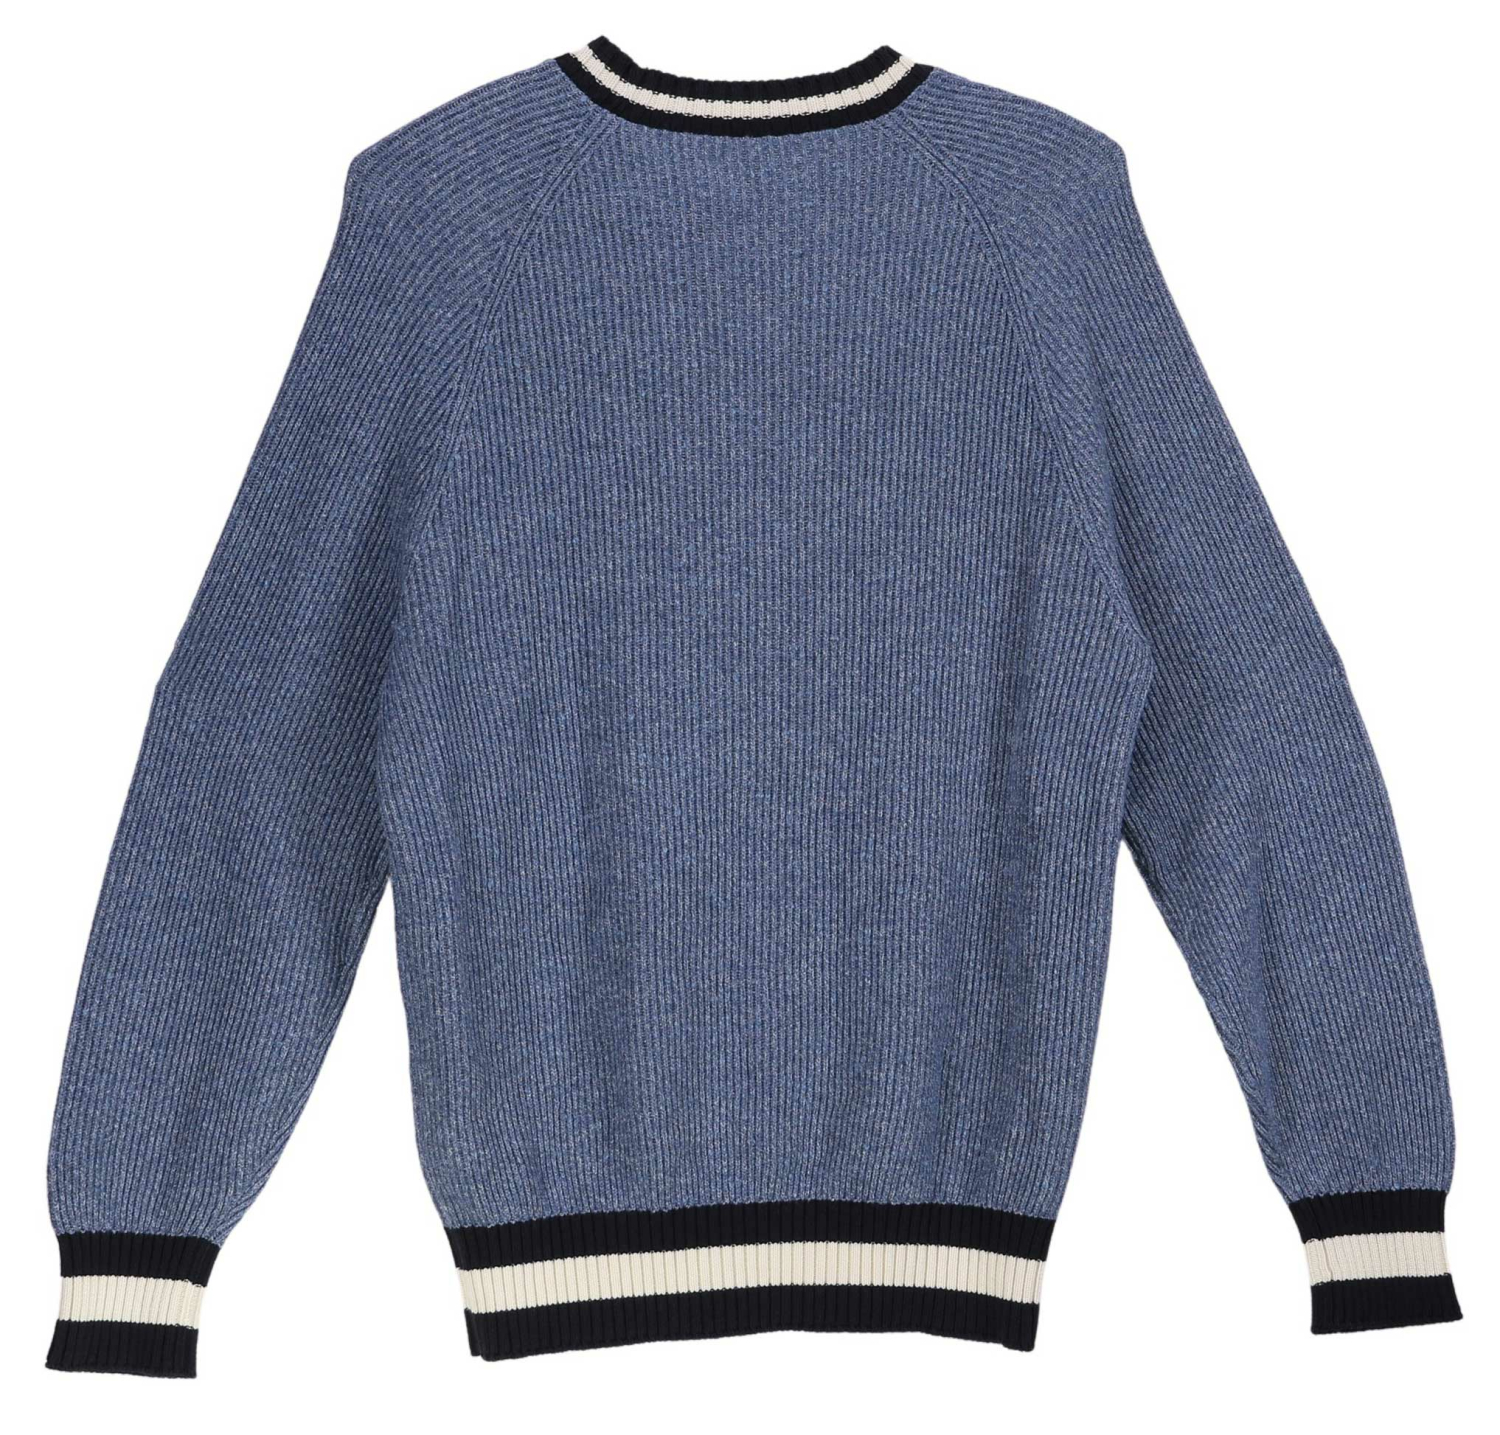 Brunello Cucinelli Men's Loose Cable Knit Sweater Pullover | eBay